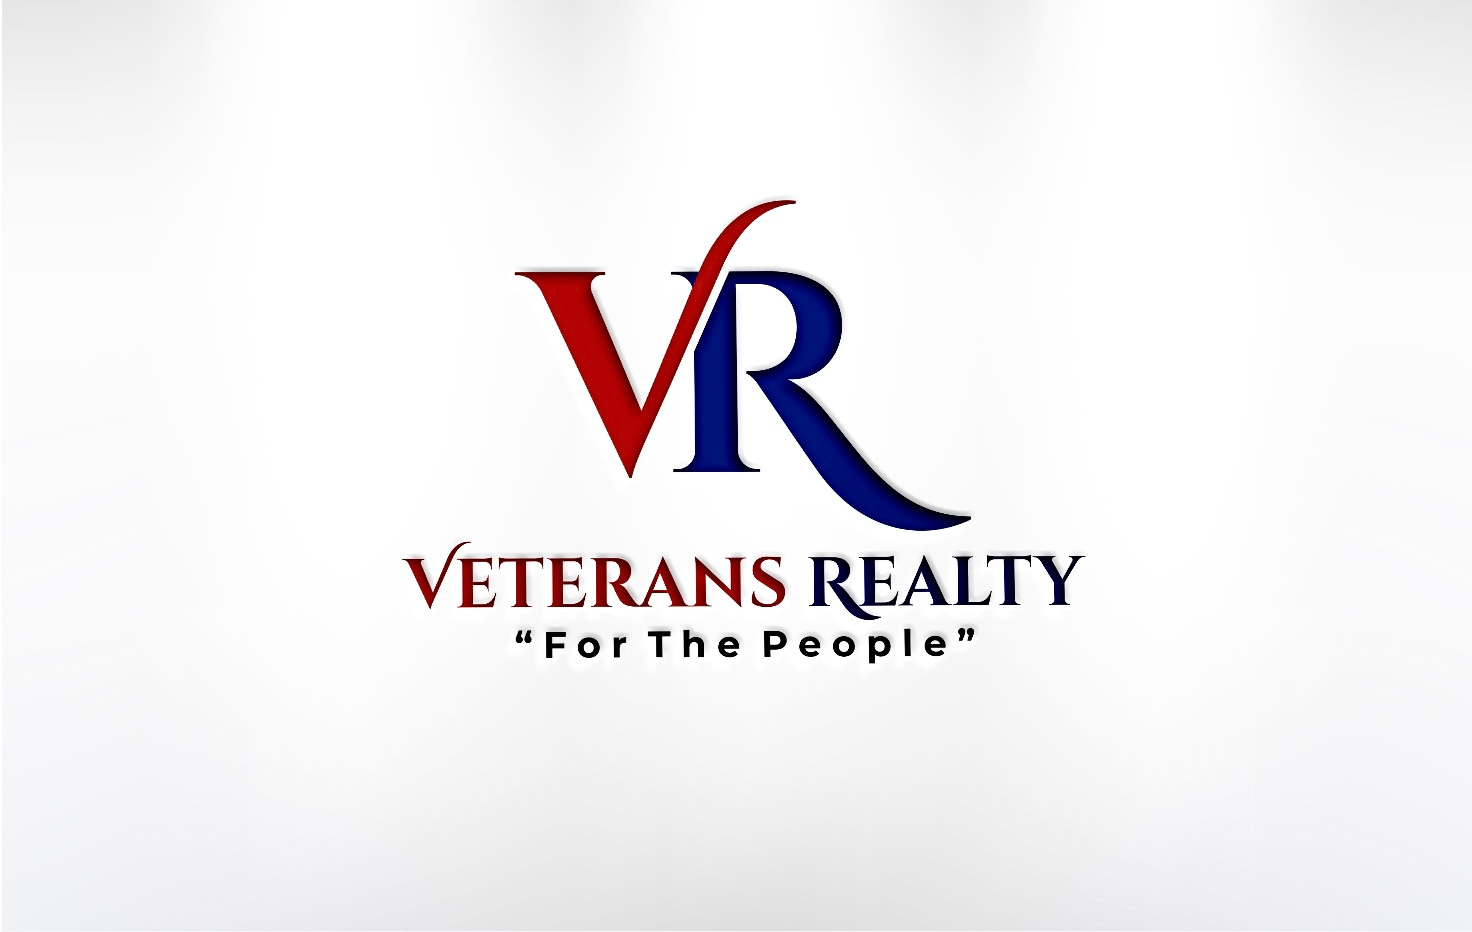 Veterans Reality Slogan